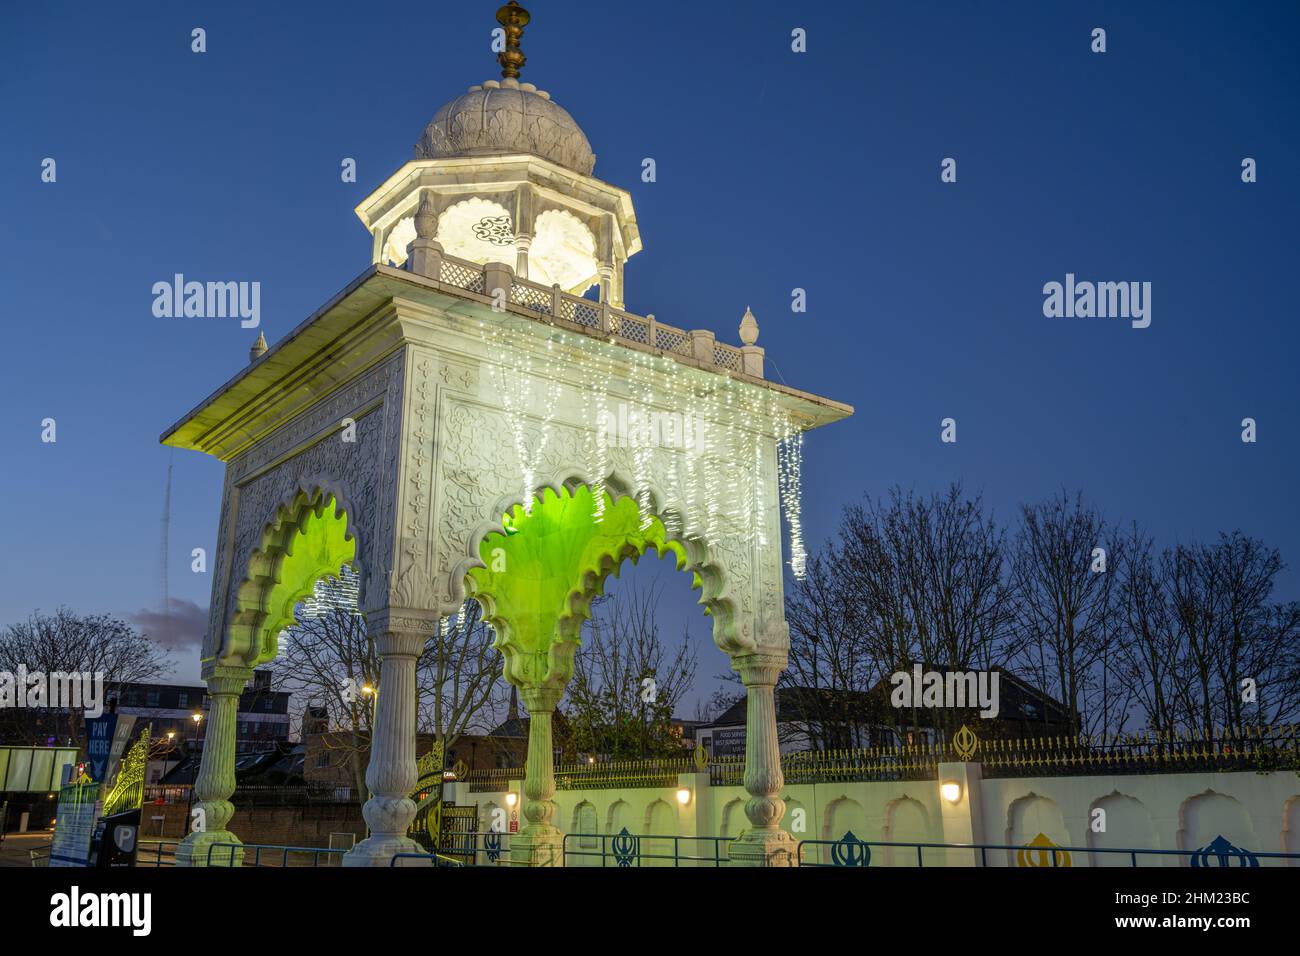 The entrance gate to the Sikh temple Siri Guru Nanak Darbar Gurdwara Gravesend Kent at night Stock Photo